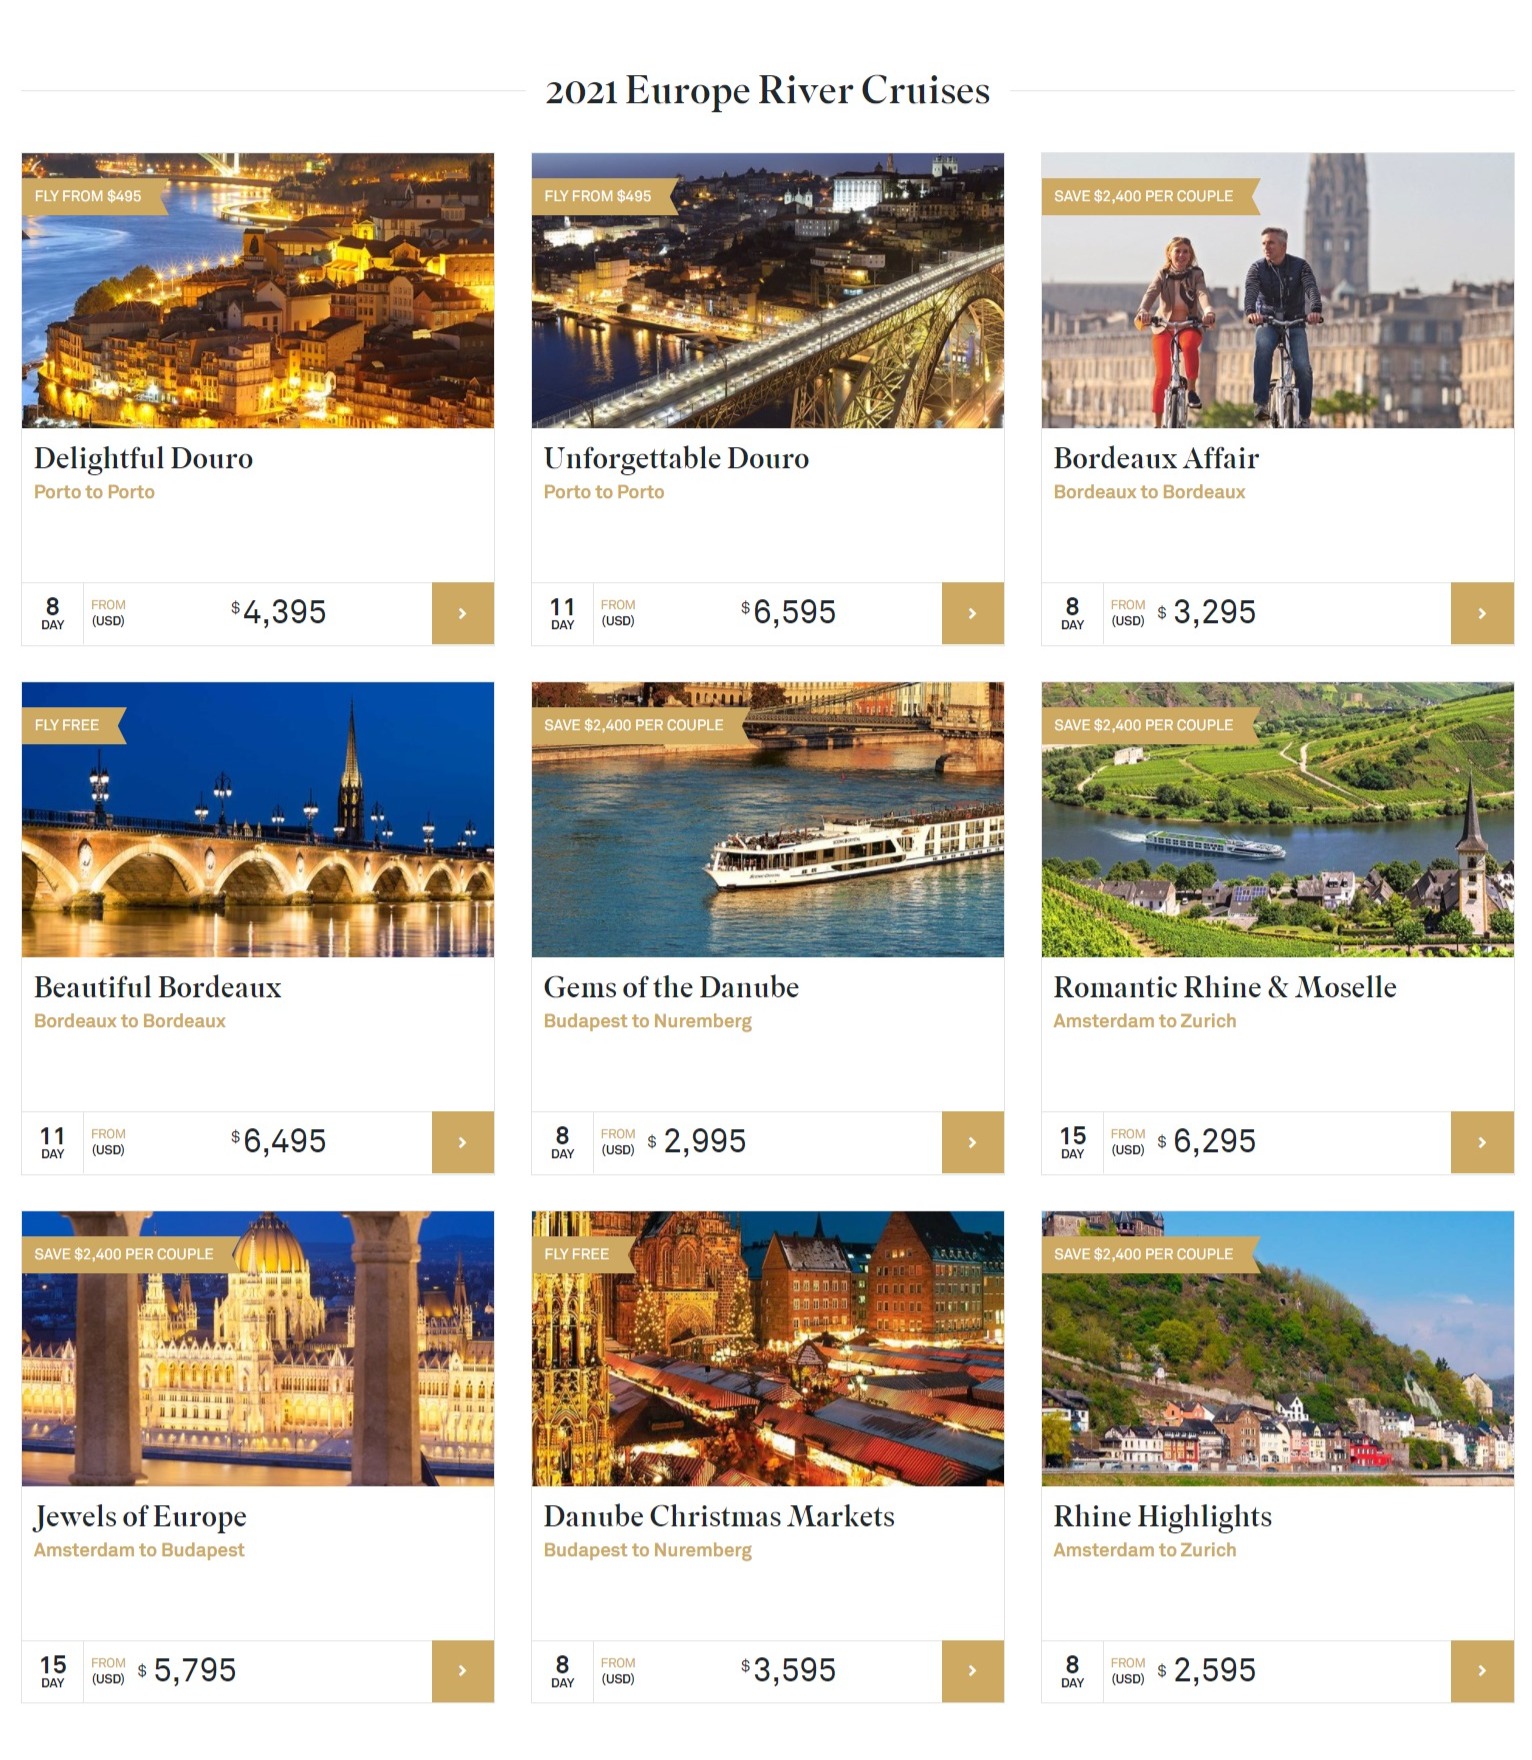 Scenic Cruises 2021 Europe River Cruises are Back